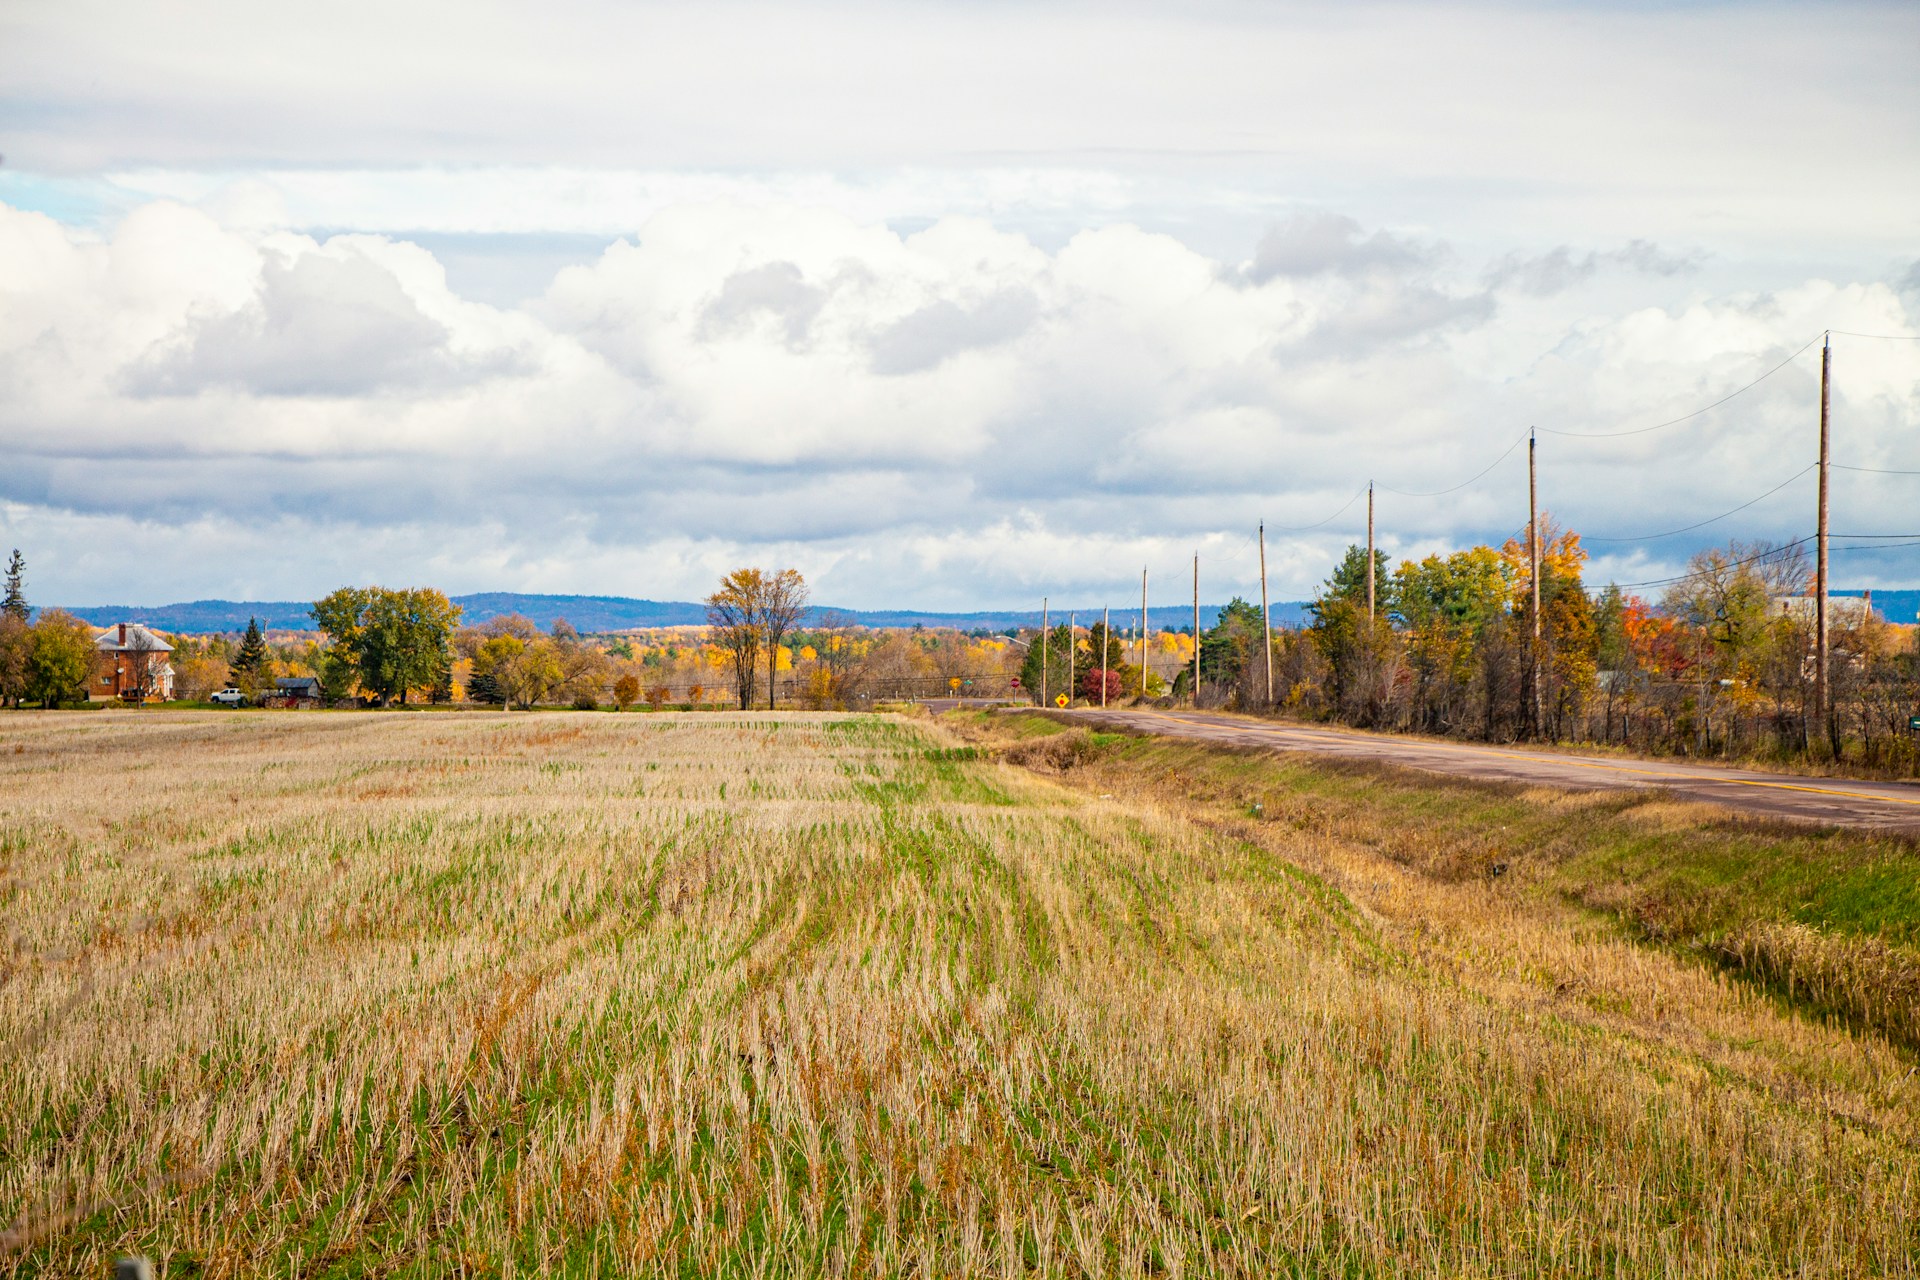 growing of grain legumes in Canada